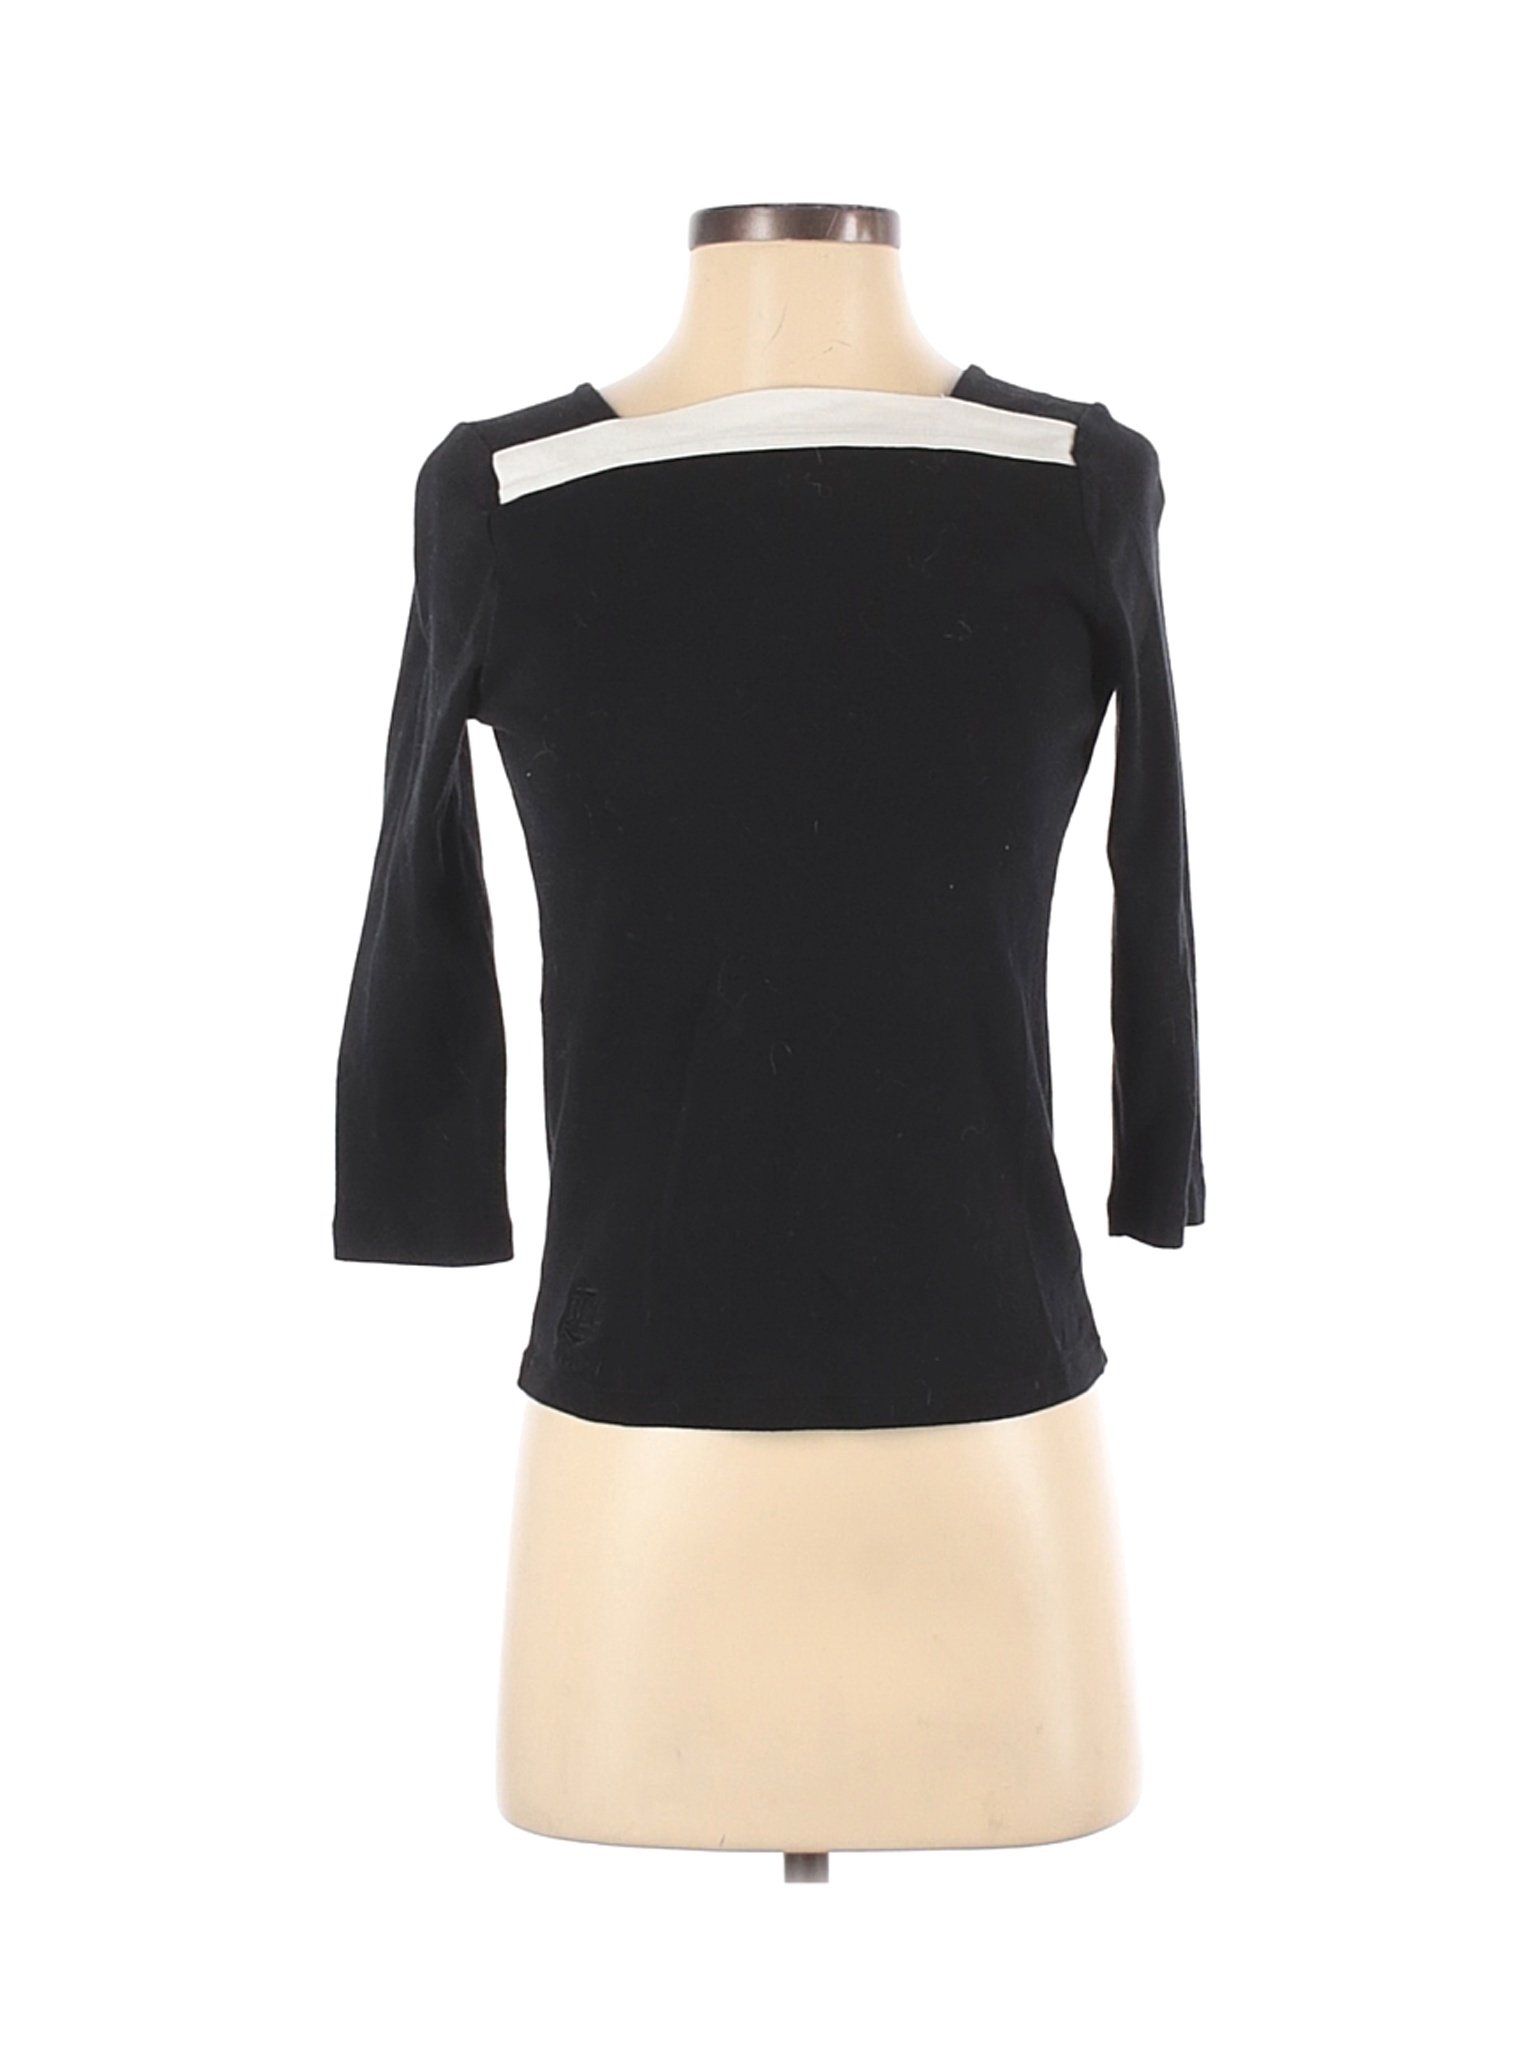 Lauren by Ralph Lauren Women Black 3/4 Sleeve T-Shirt XS | eBay